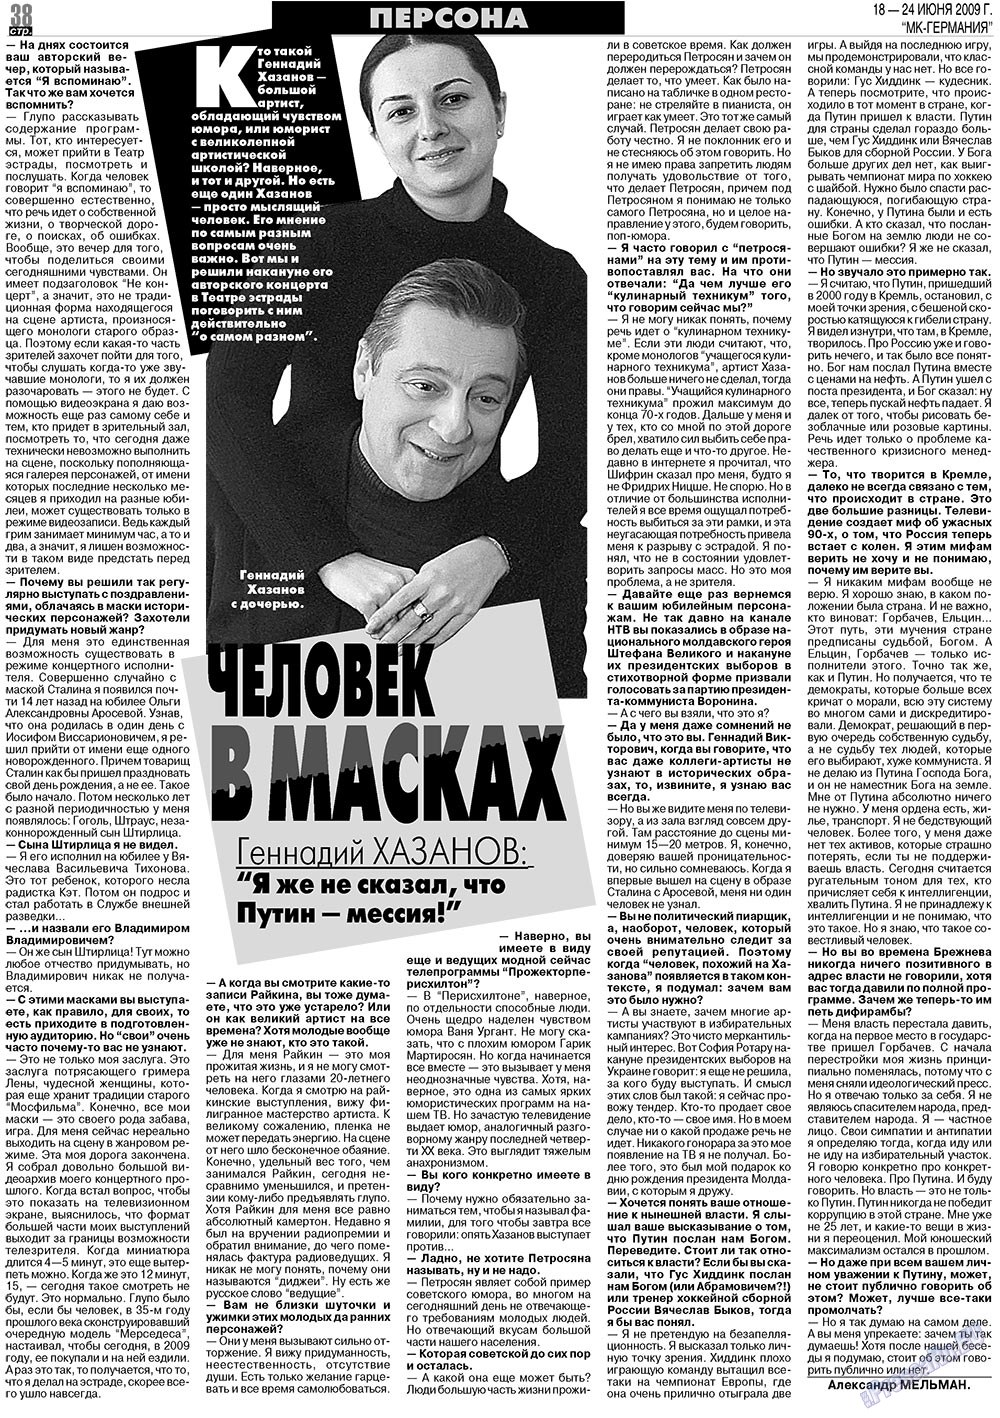 МК-Германия, газета. 2009 №25 стр.38